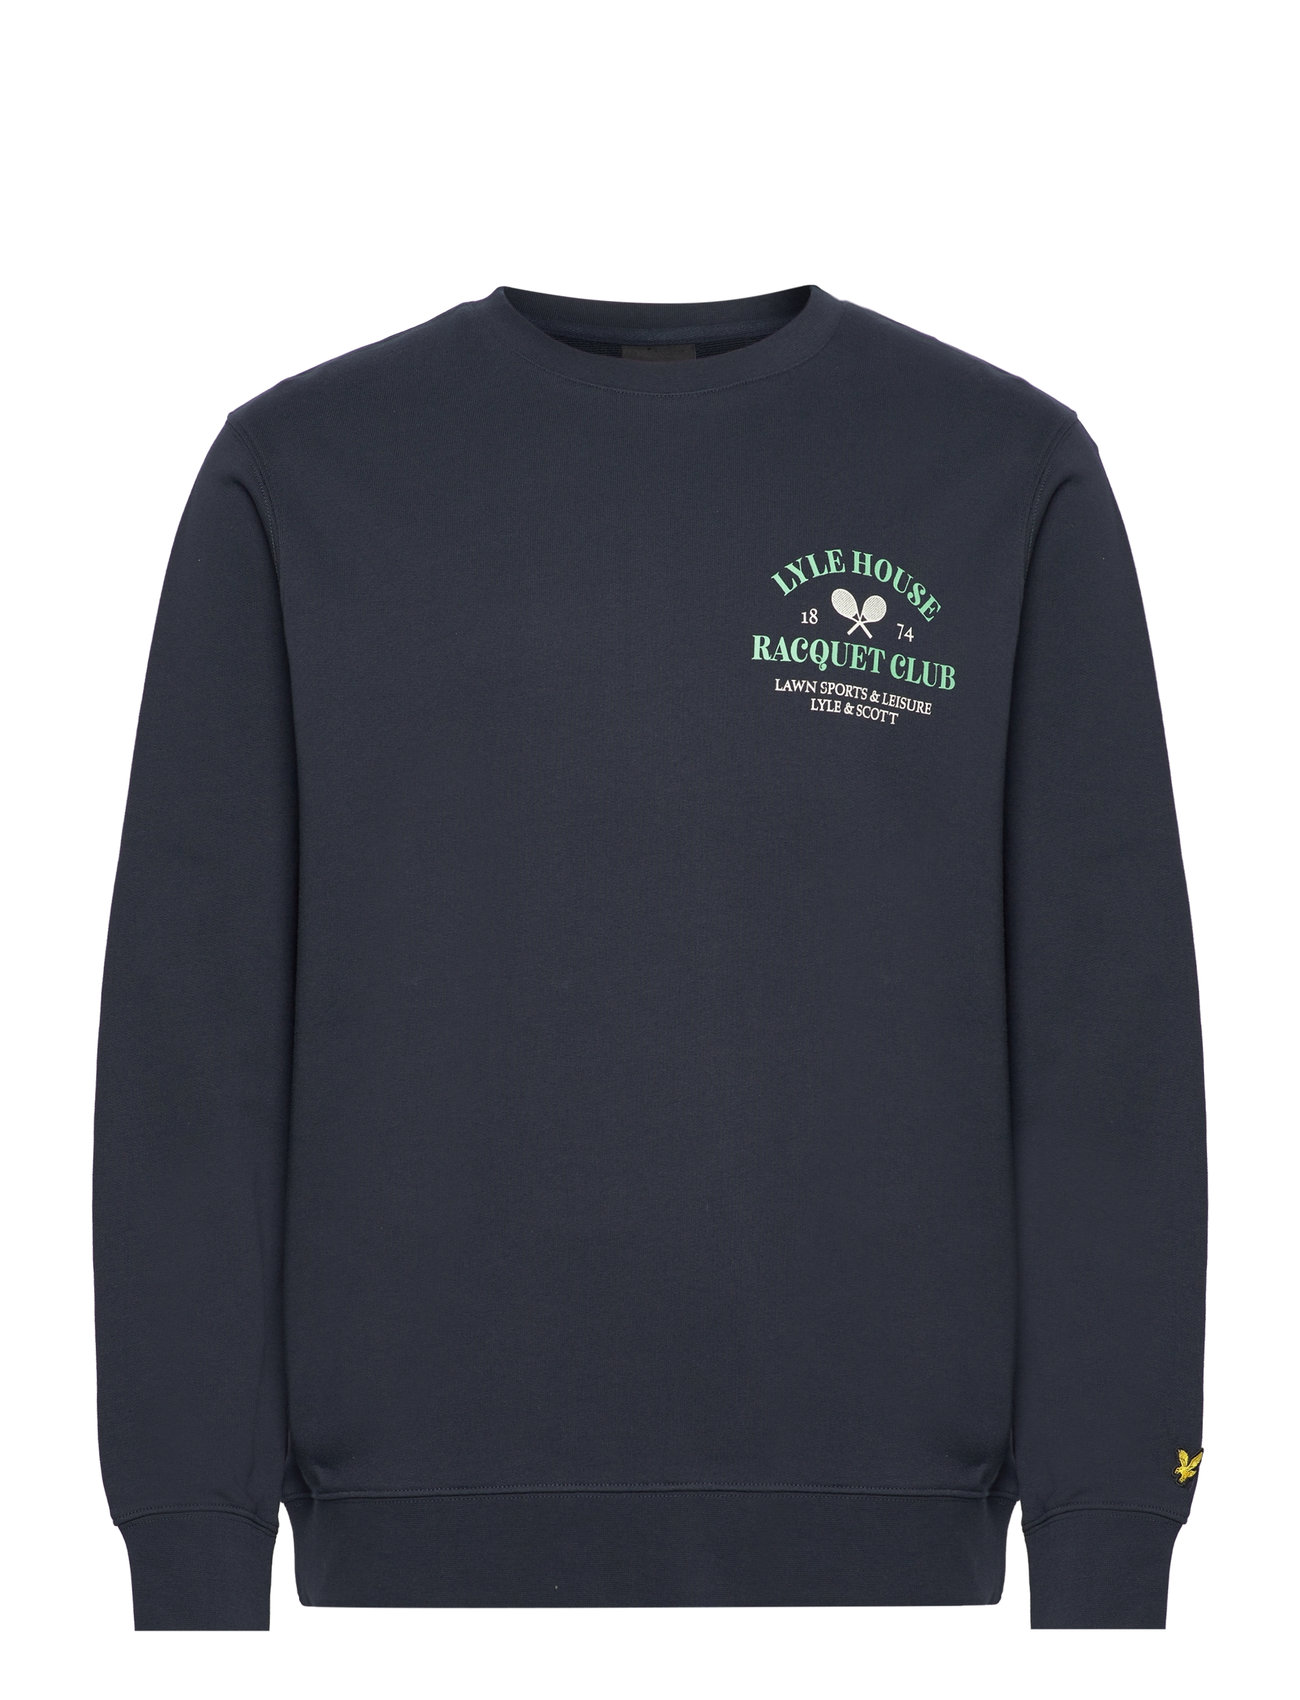 Racquet Club Graphic Sweatshirt Tops Sweatshirts & Hoodies Sweatshirts Navy Lyle & Scott